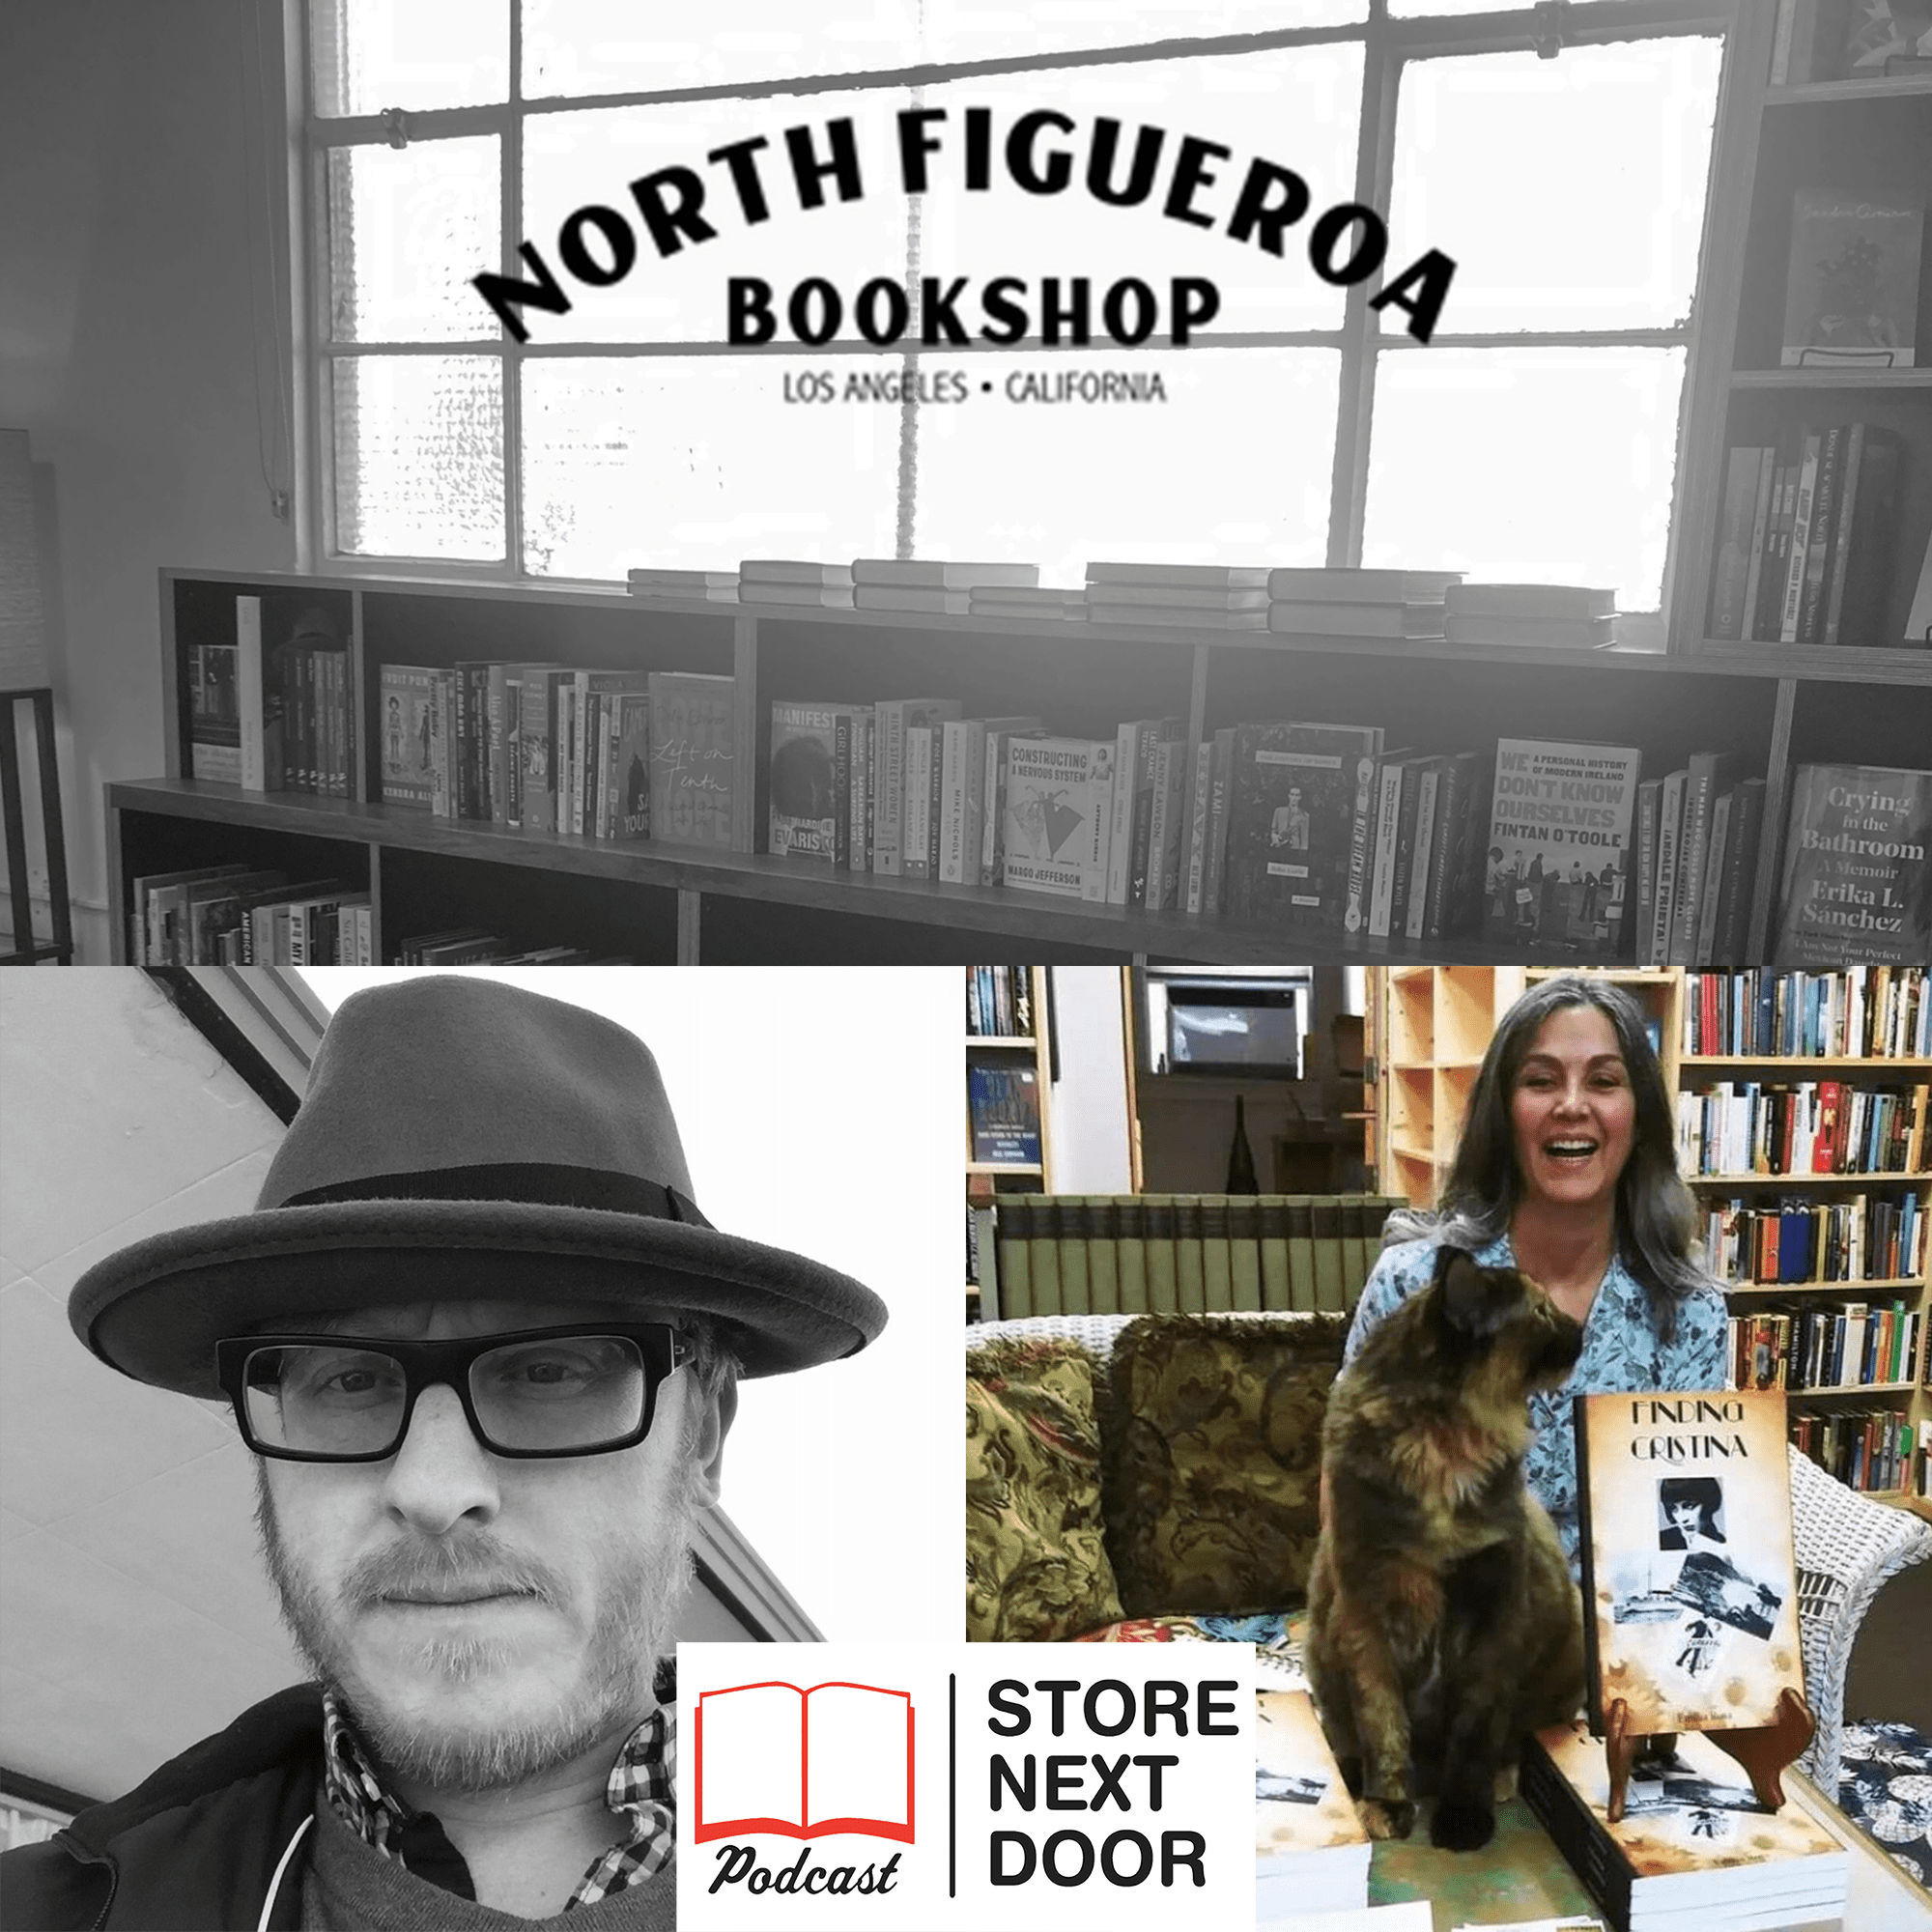 Store Next Door Season 2 Ep 1 North Figueroa Bookshop & Author Emilia Rosa